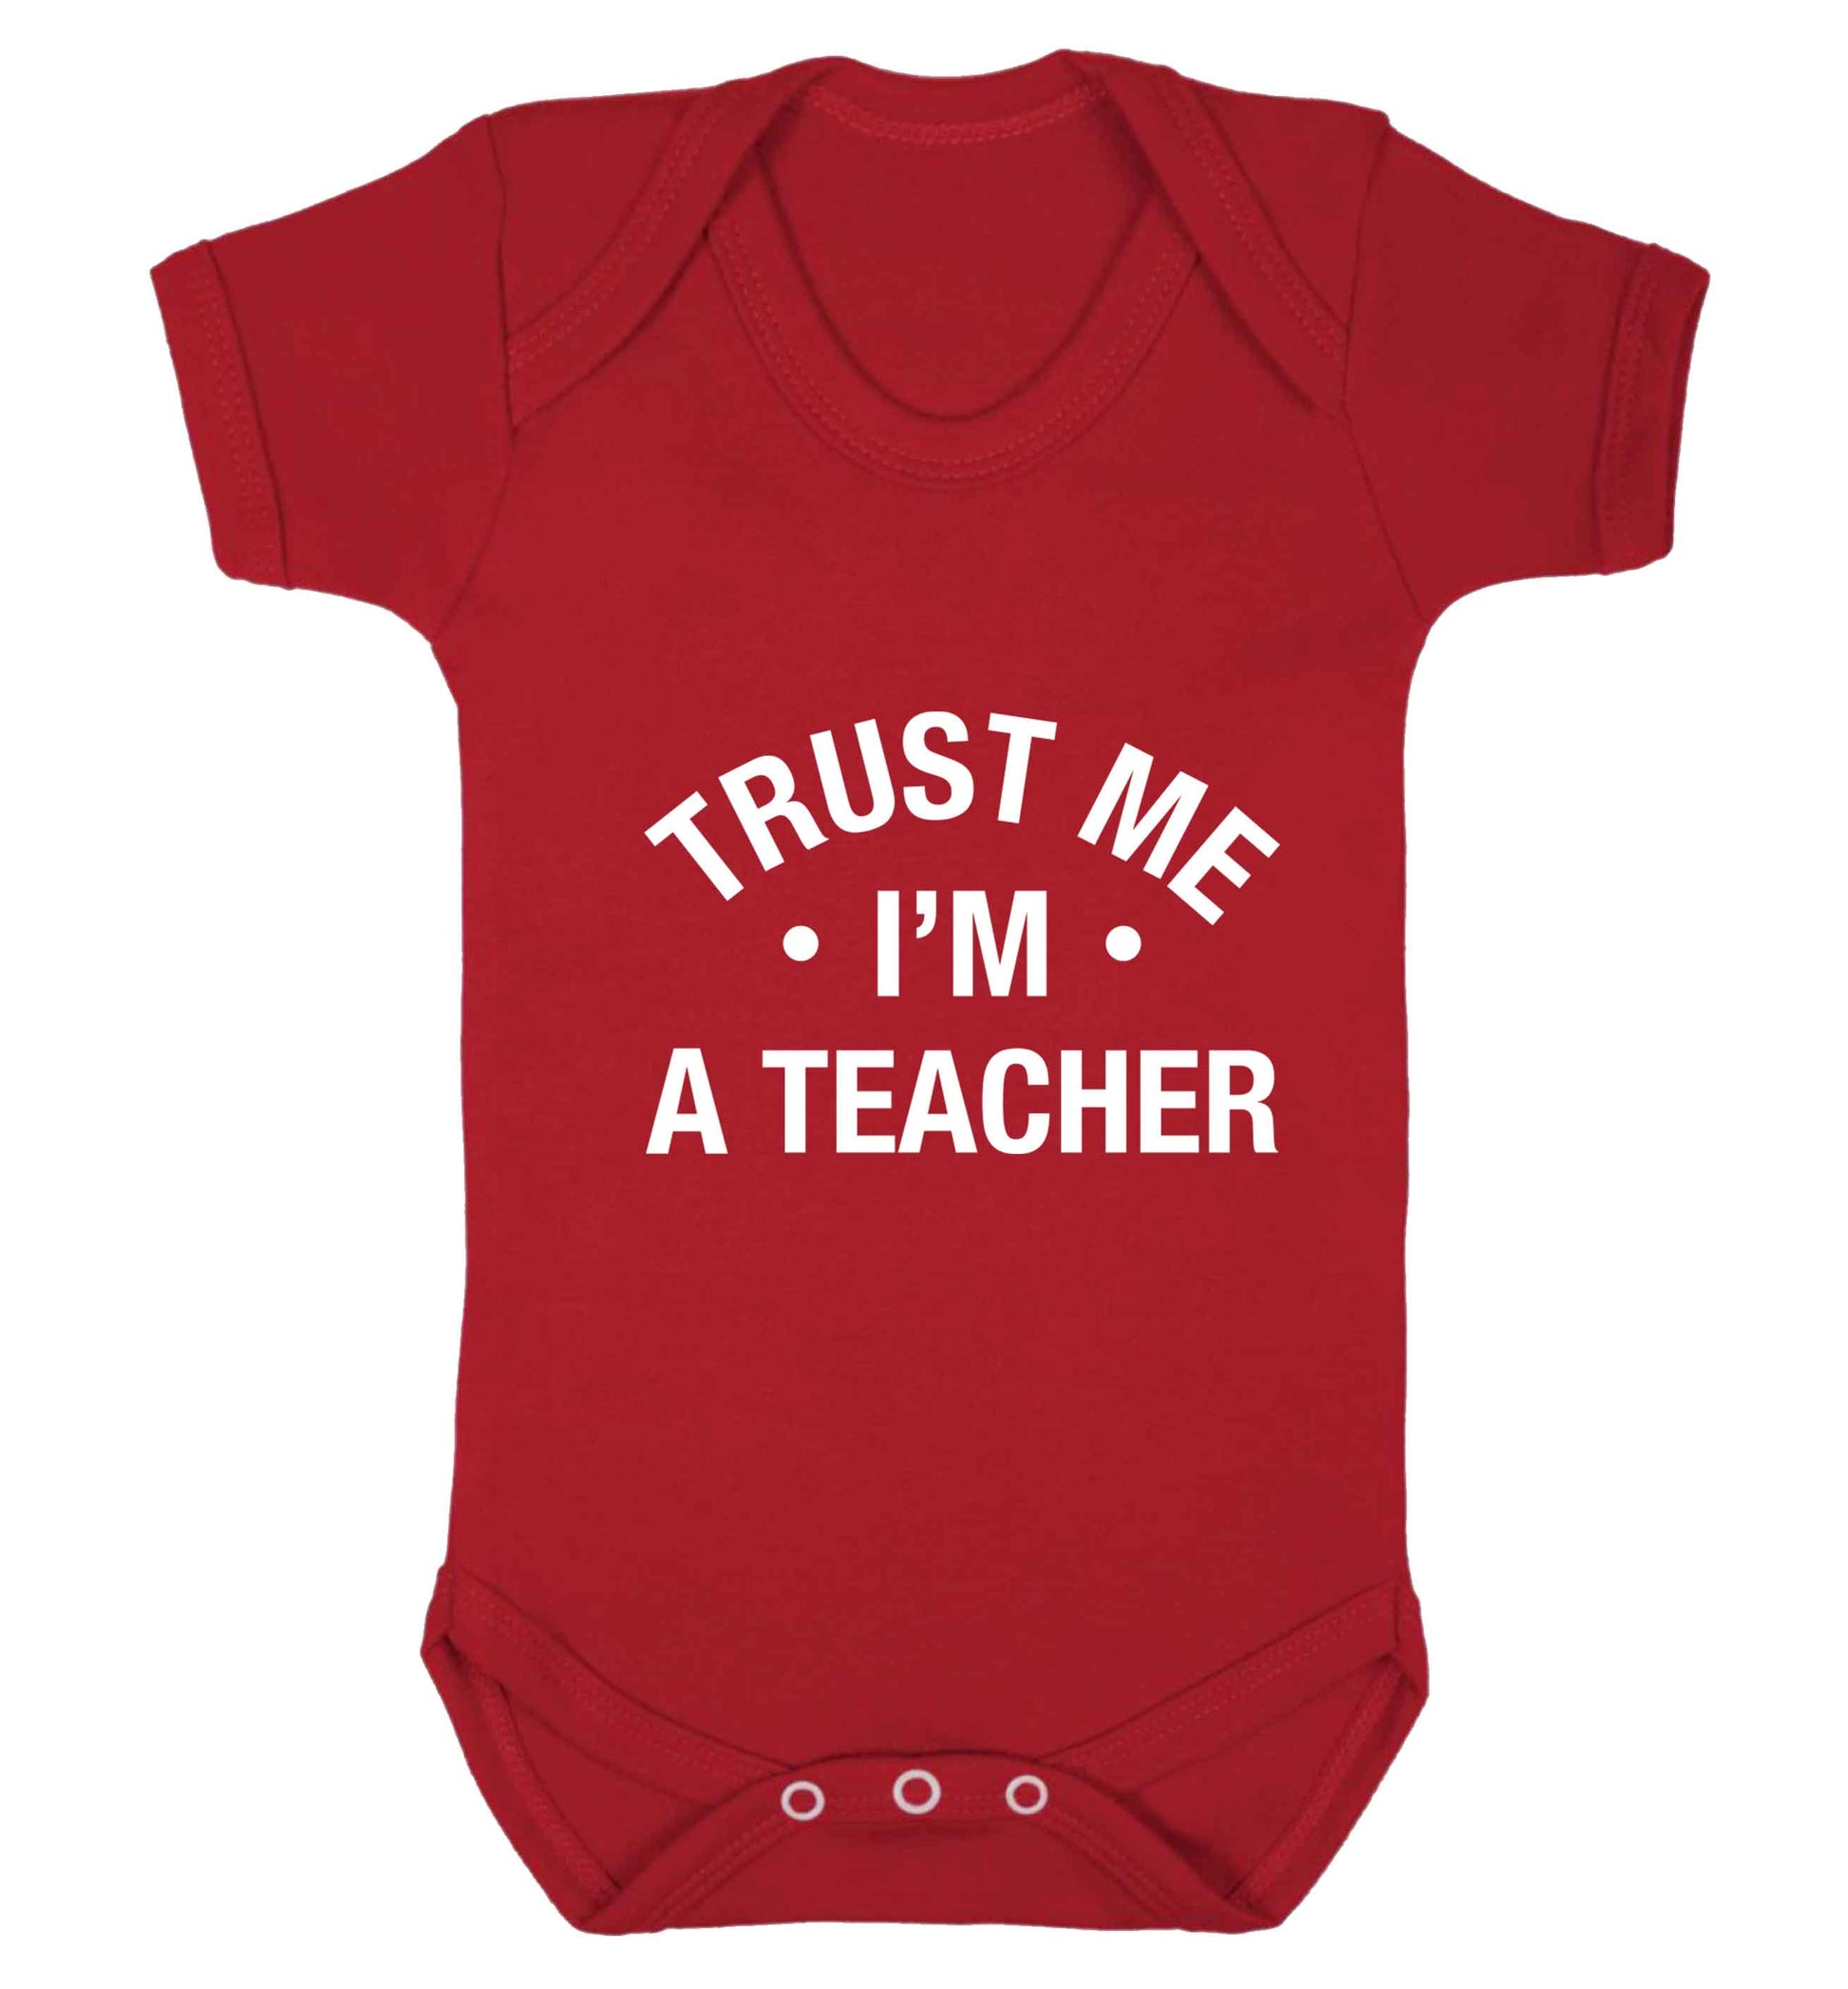 Trust me I'm a teacher baby vest red 18-24 months